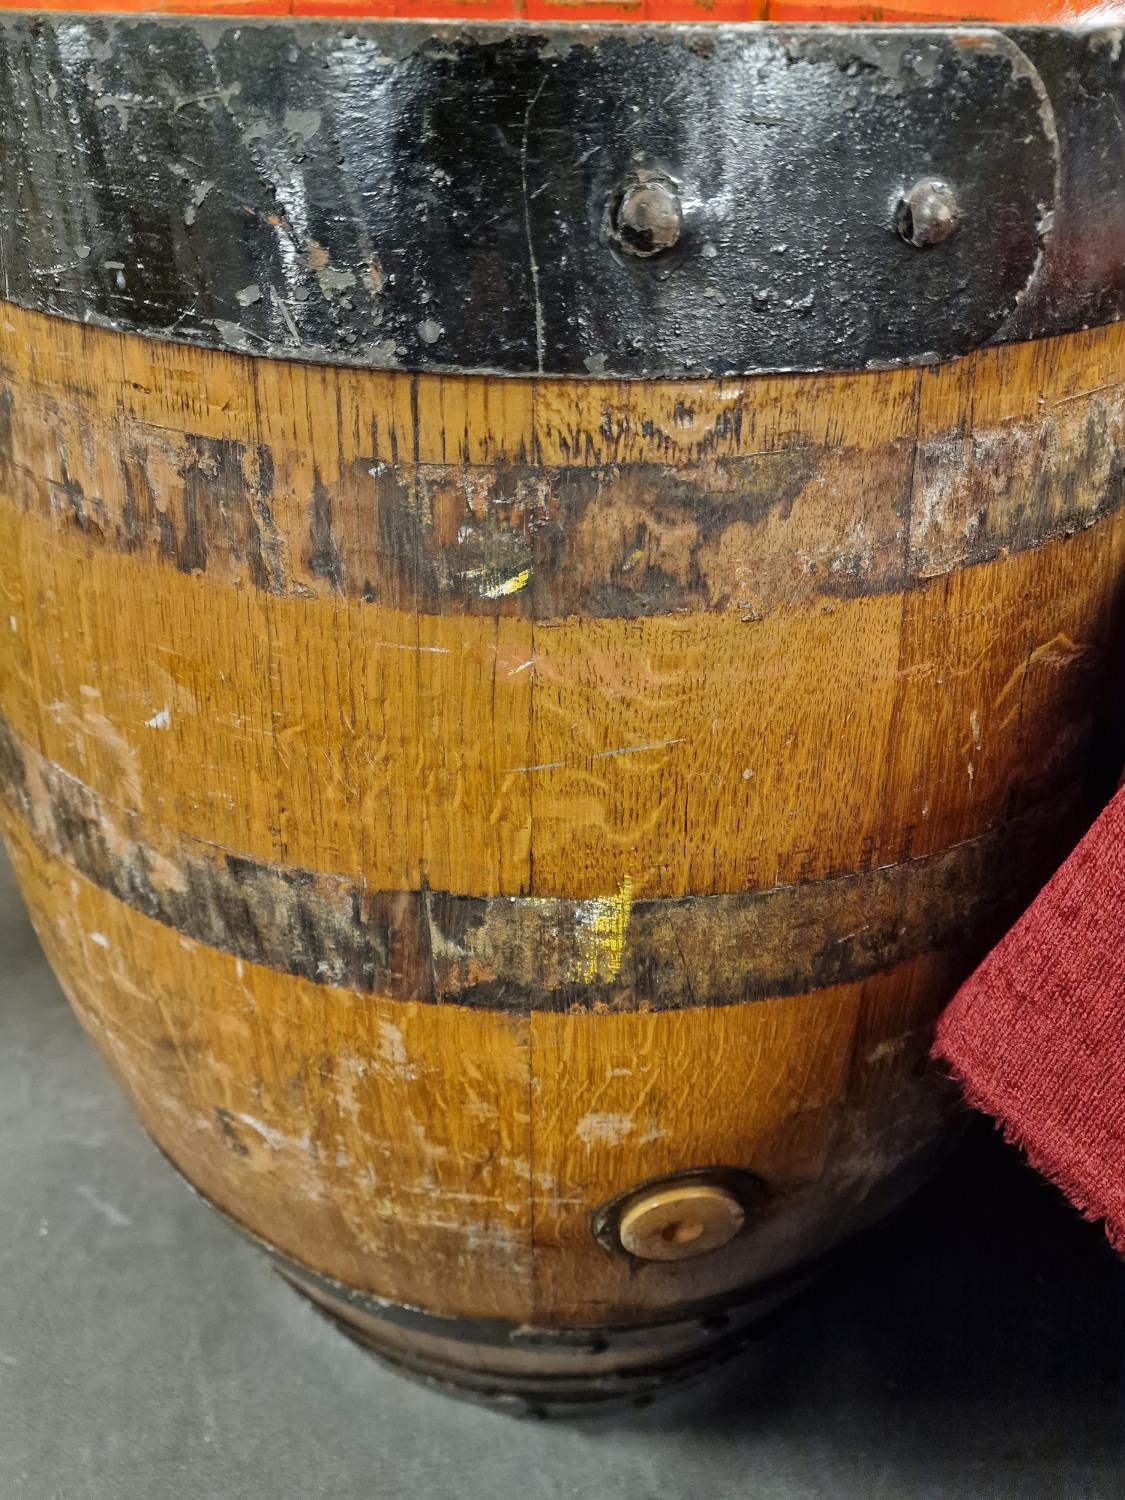 Original Tetley Walker 67768 Beer Barrel - 83cm high - Breweriana Interest - Image 3 of 3